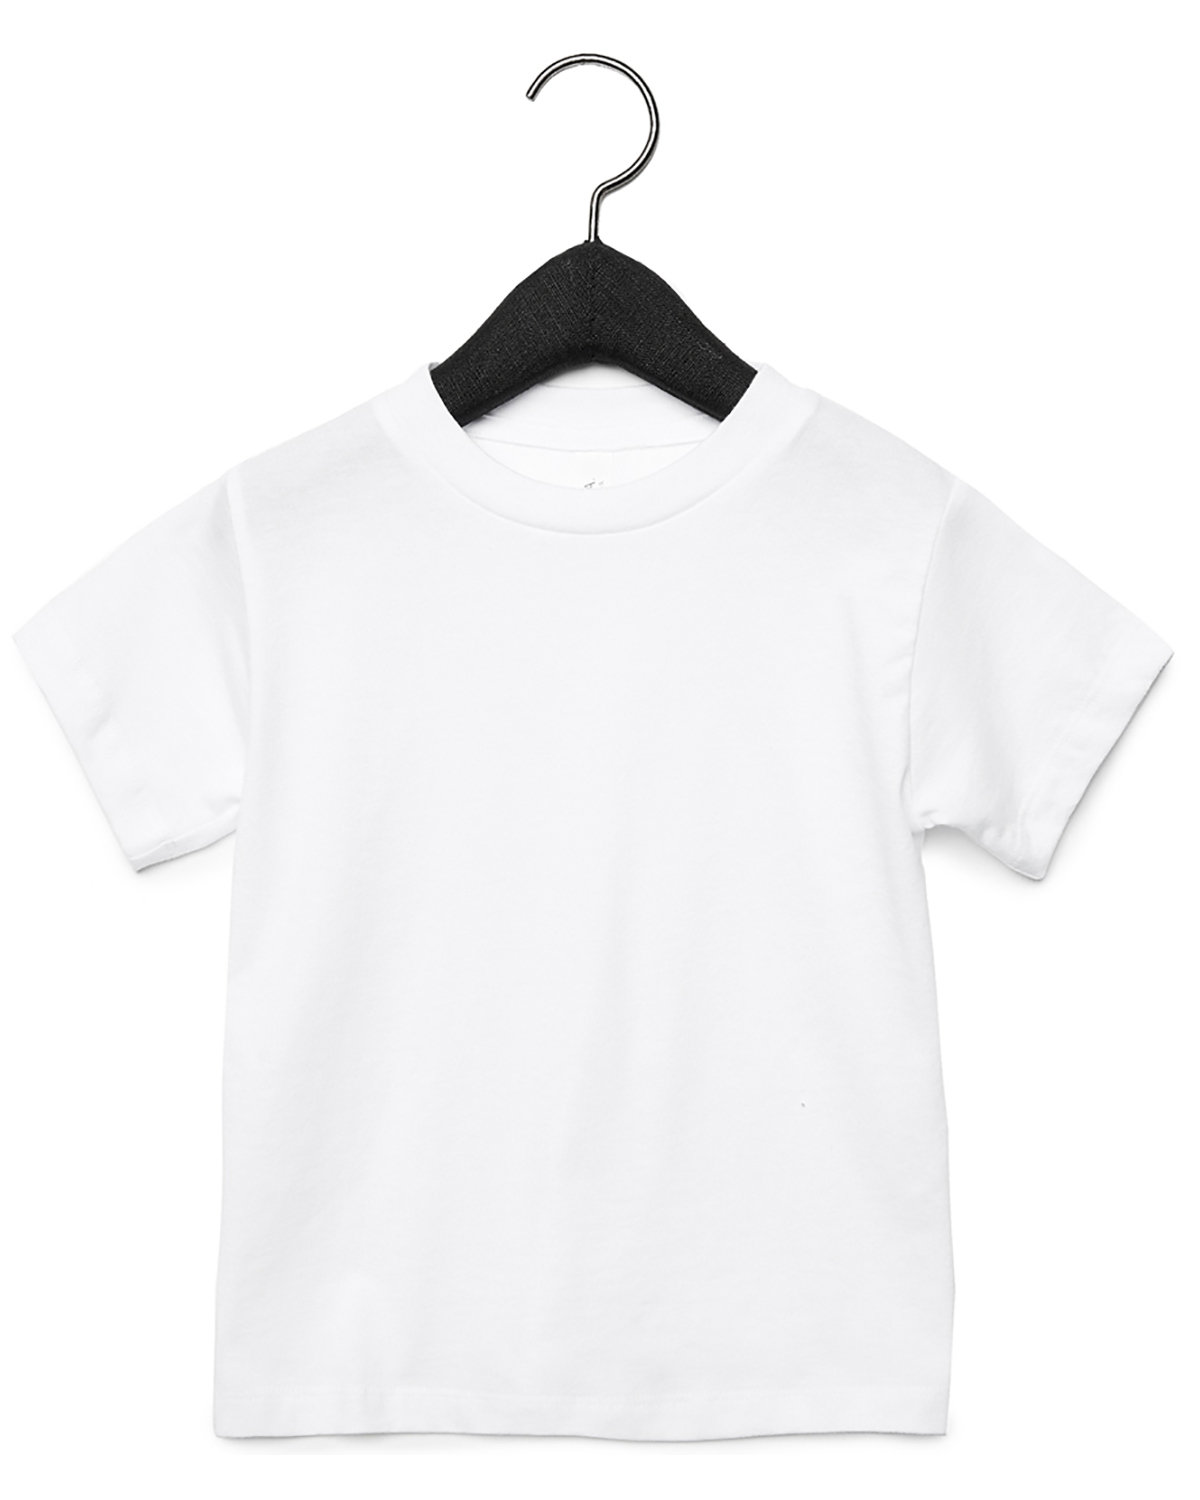 https://images.shirtspace.com/fullsize/mjqiphluckugWk7imLybxg%3D%3D/334154/7053-bella-canvas-3001t-toddler-jersey-short-sleeve-t-shirt-front-white.jpg